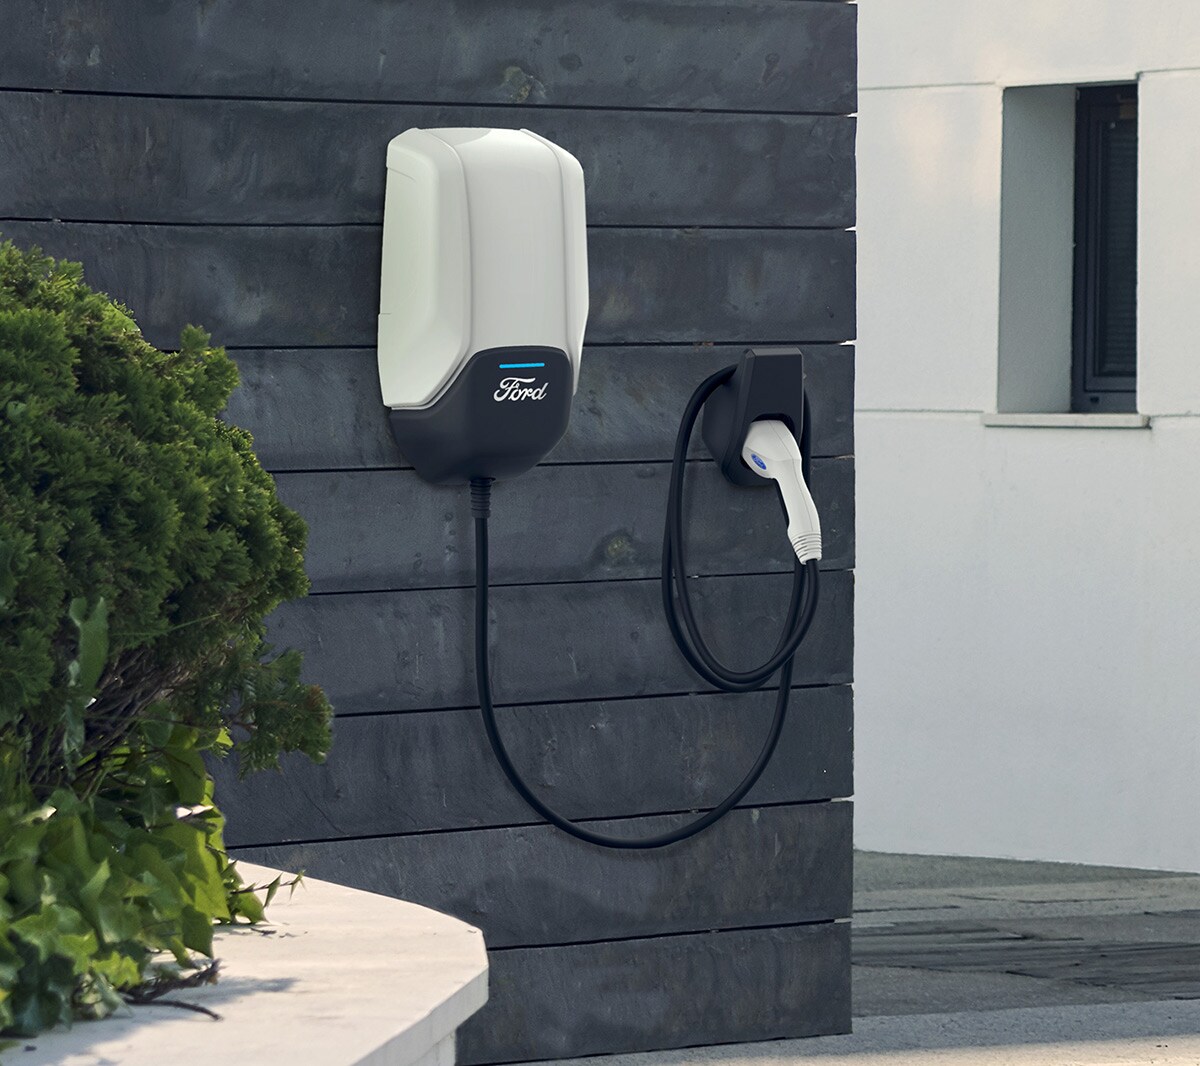 Ford Kuga outdoor charging port